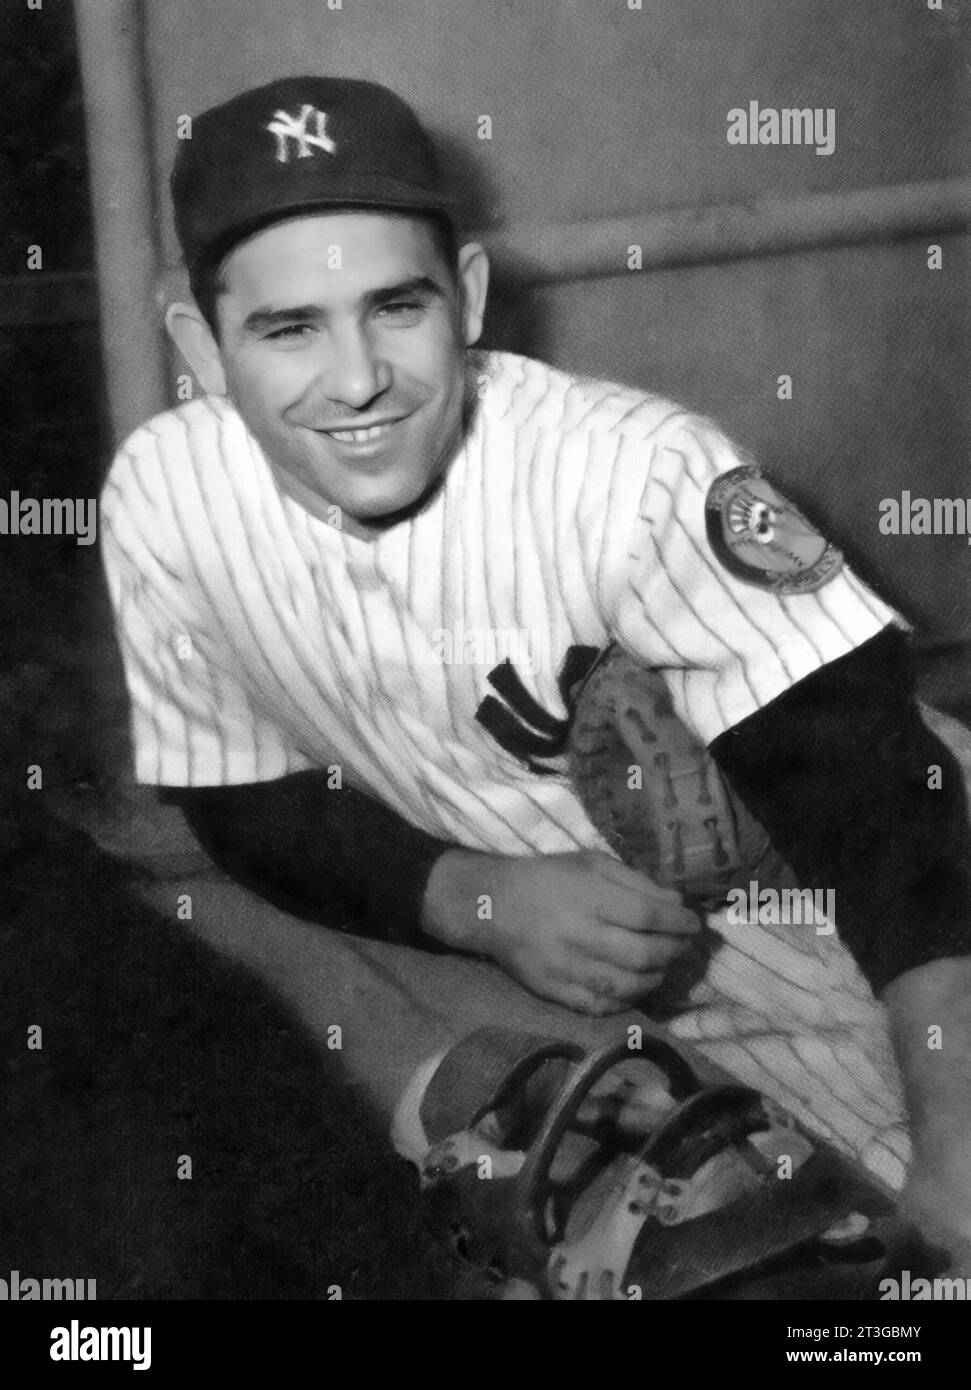 Yogi Berra. Ritratto del giocatore di baseball americano, Lawrence Peter 'Yogi' Berra (1925-2015) in uniforme New York Yankees, carta Bubblegum, 1953 Foto Stock